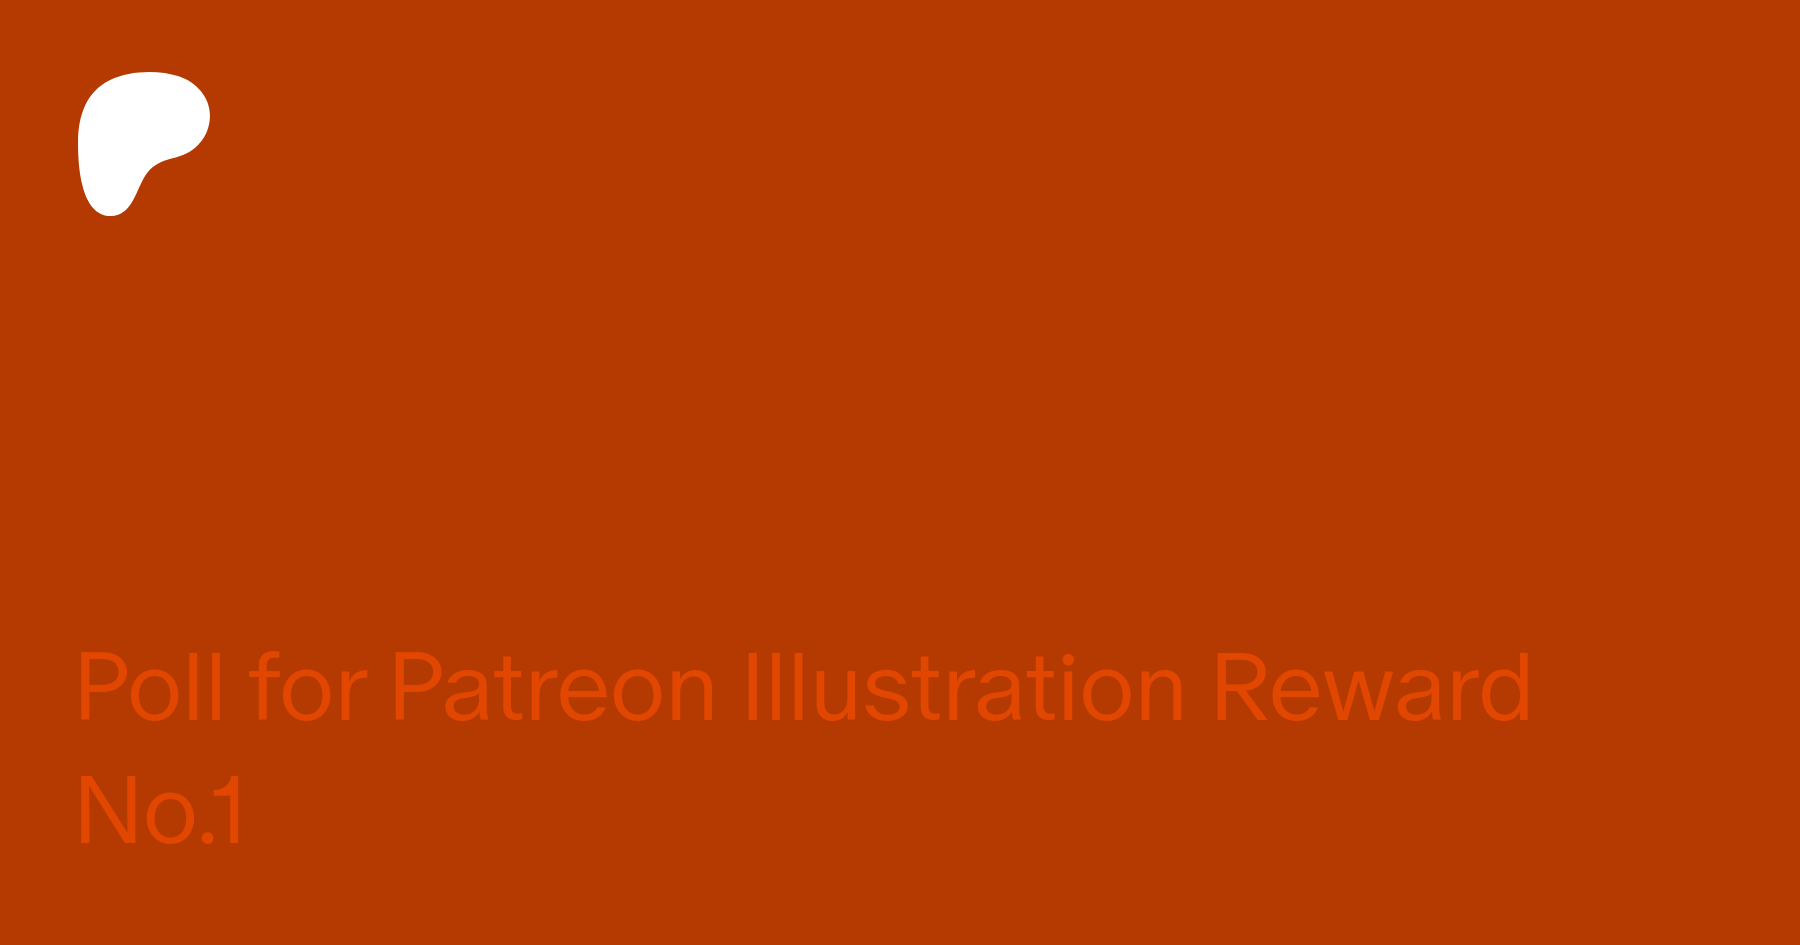 Poll for Patreon Illustration Reward No.1 | Patreon